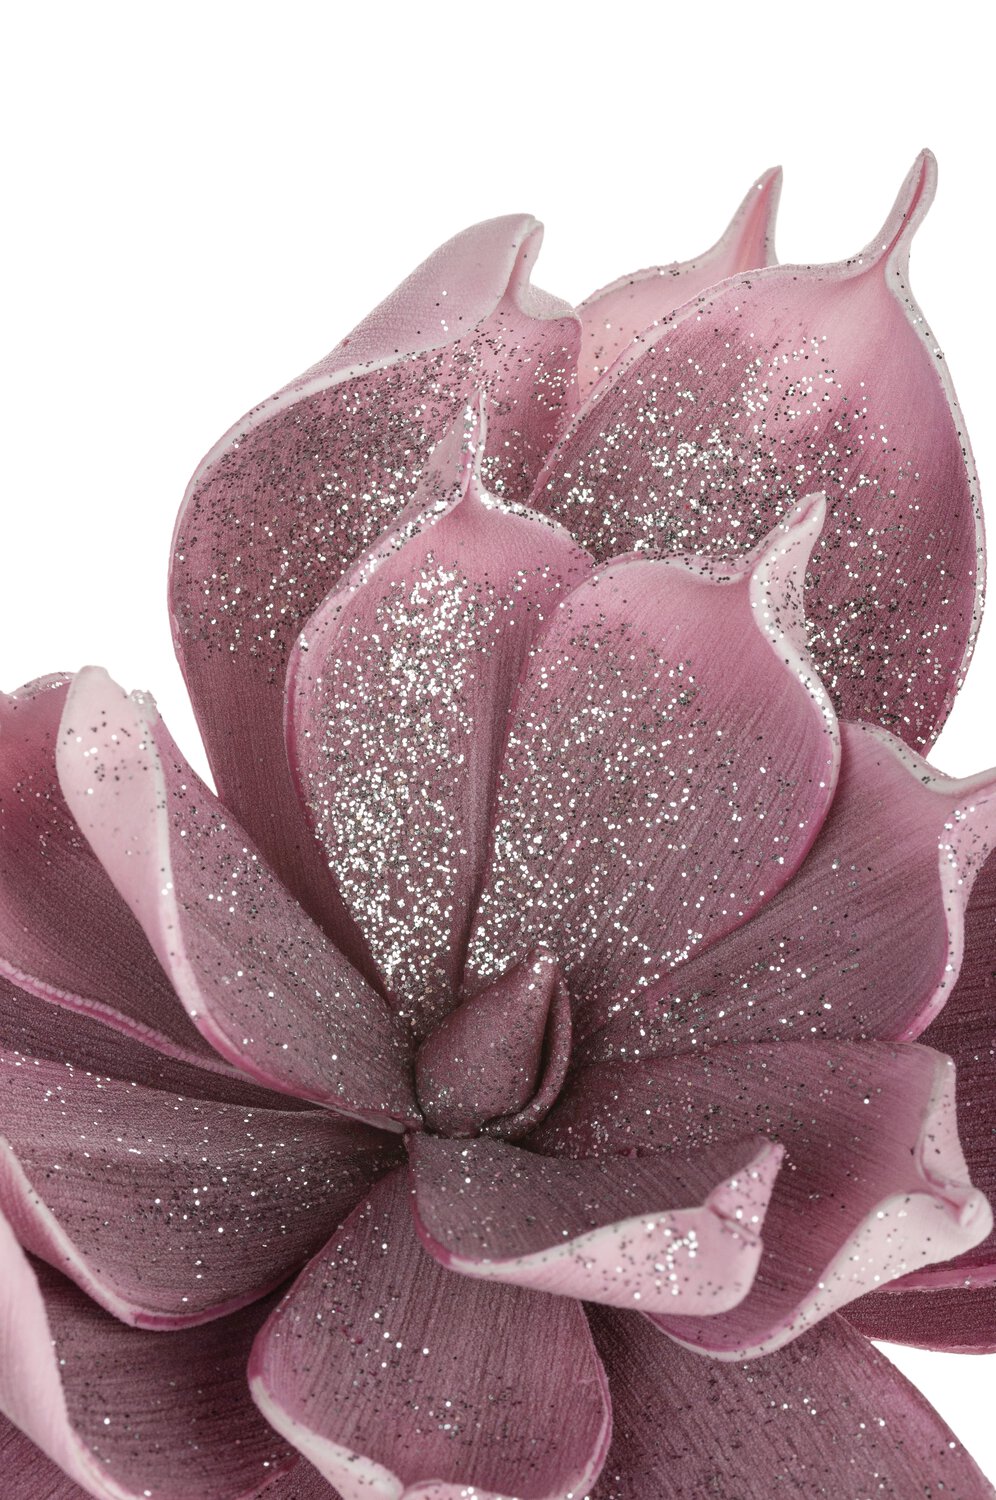 Deko Soft flower 'Aloe' mit Glitzer, 30 cm, antik-hellrosa